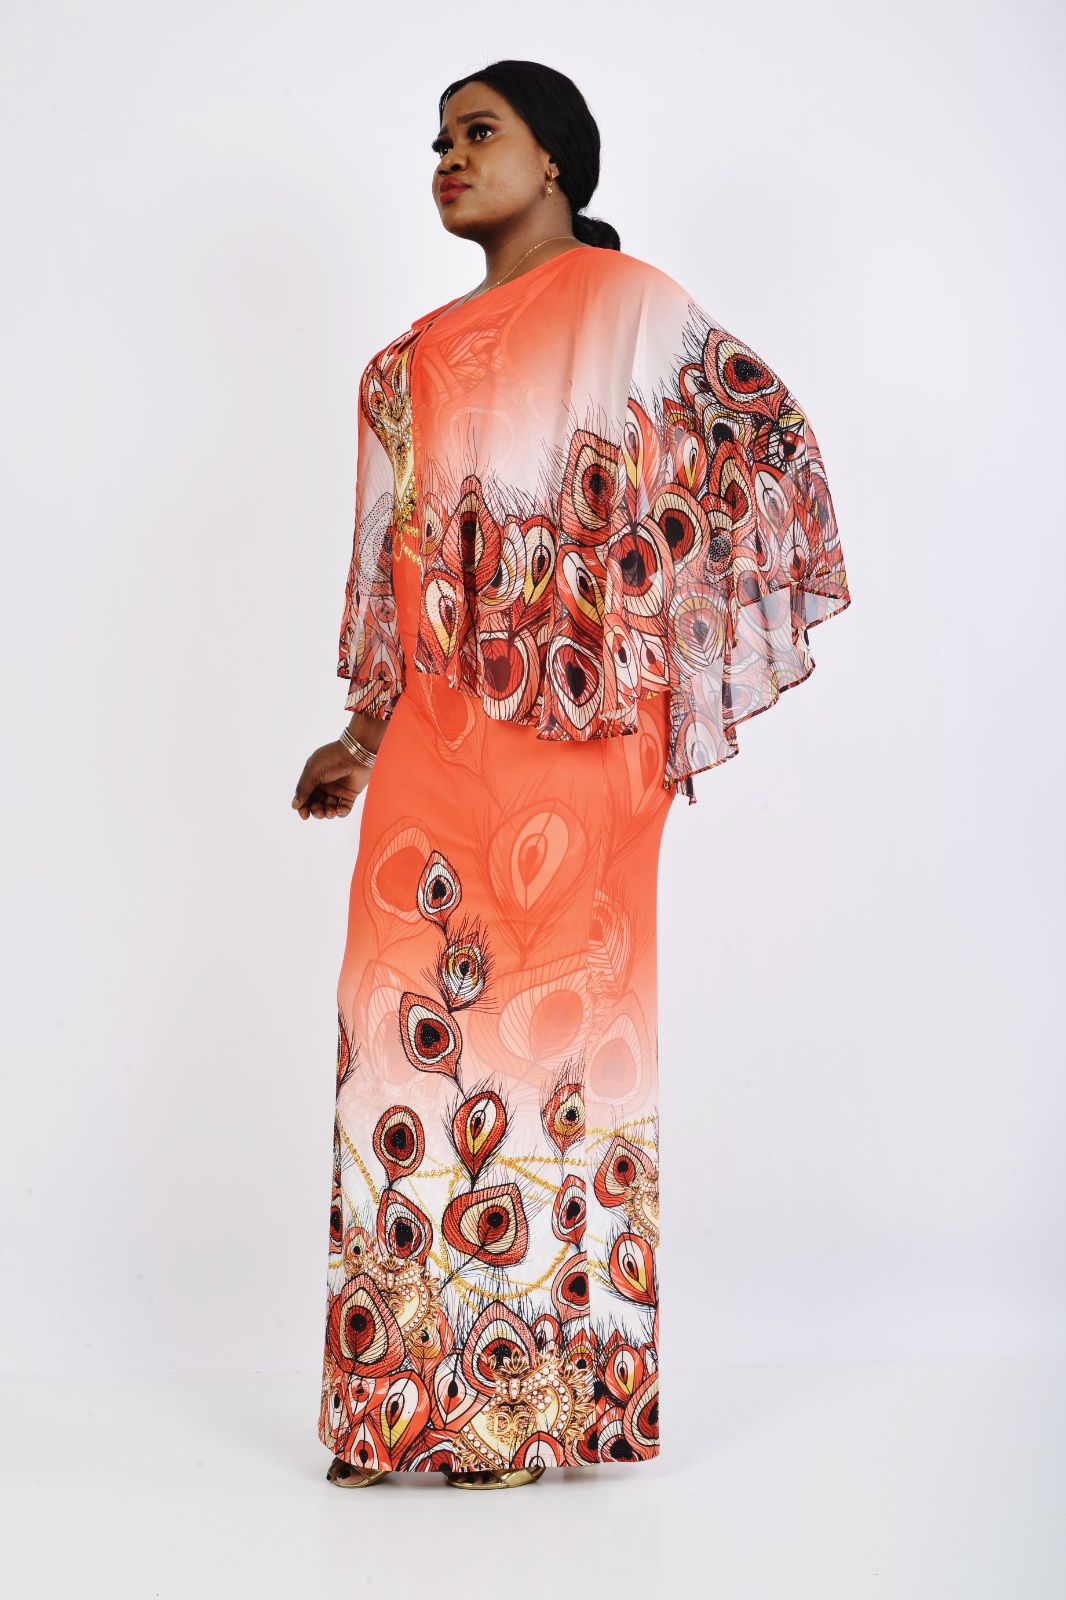 Queens Lycra peacock design dress- Godshandfashion - 44-large size 10-12